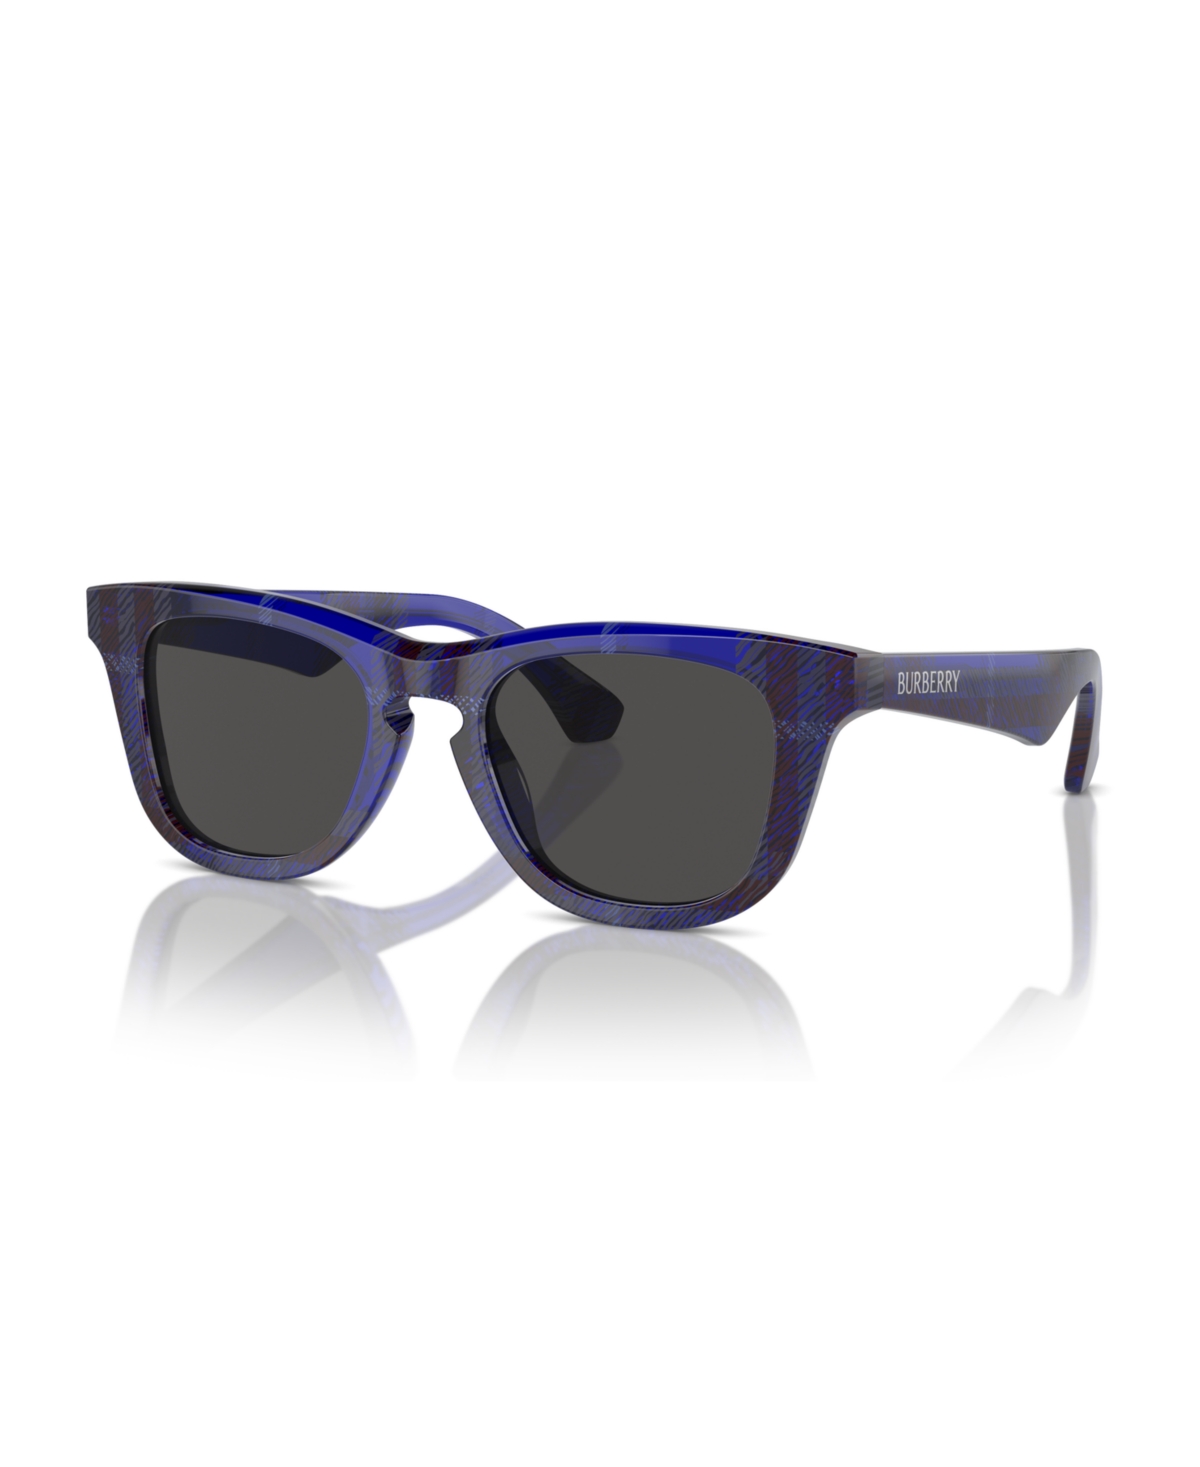 Burberry Kid's Sunglasses, Jb4002 In Check Blue